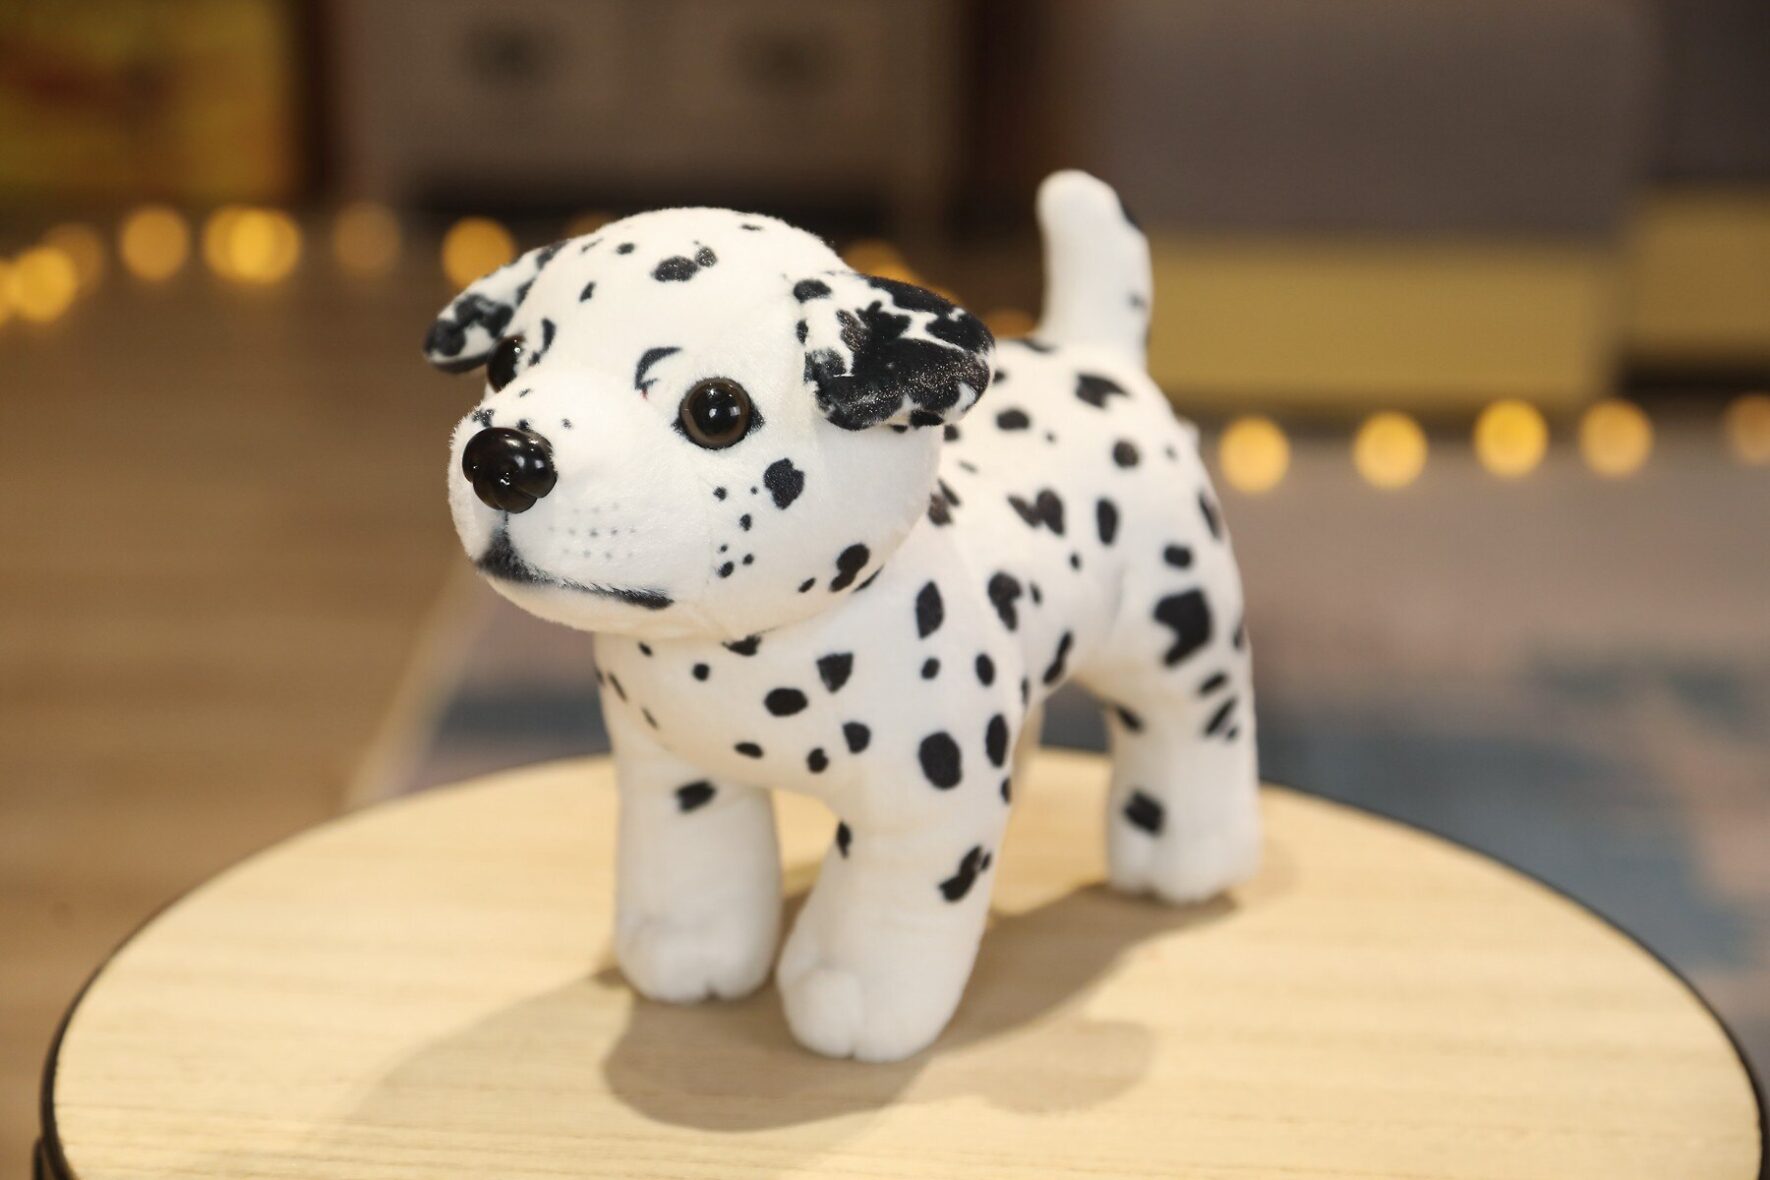 Dalmatian Dog Soft Stuffed Plush Toy